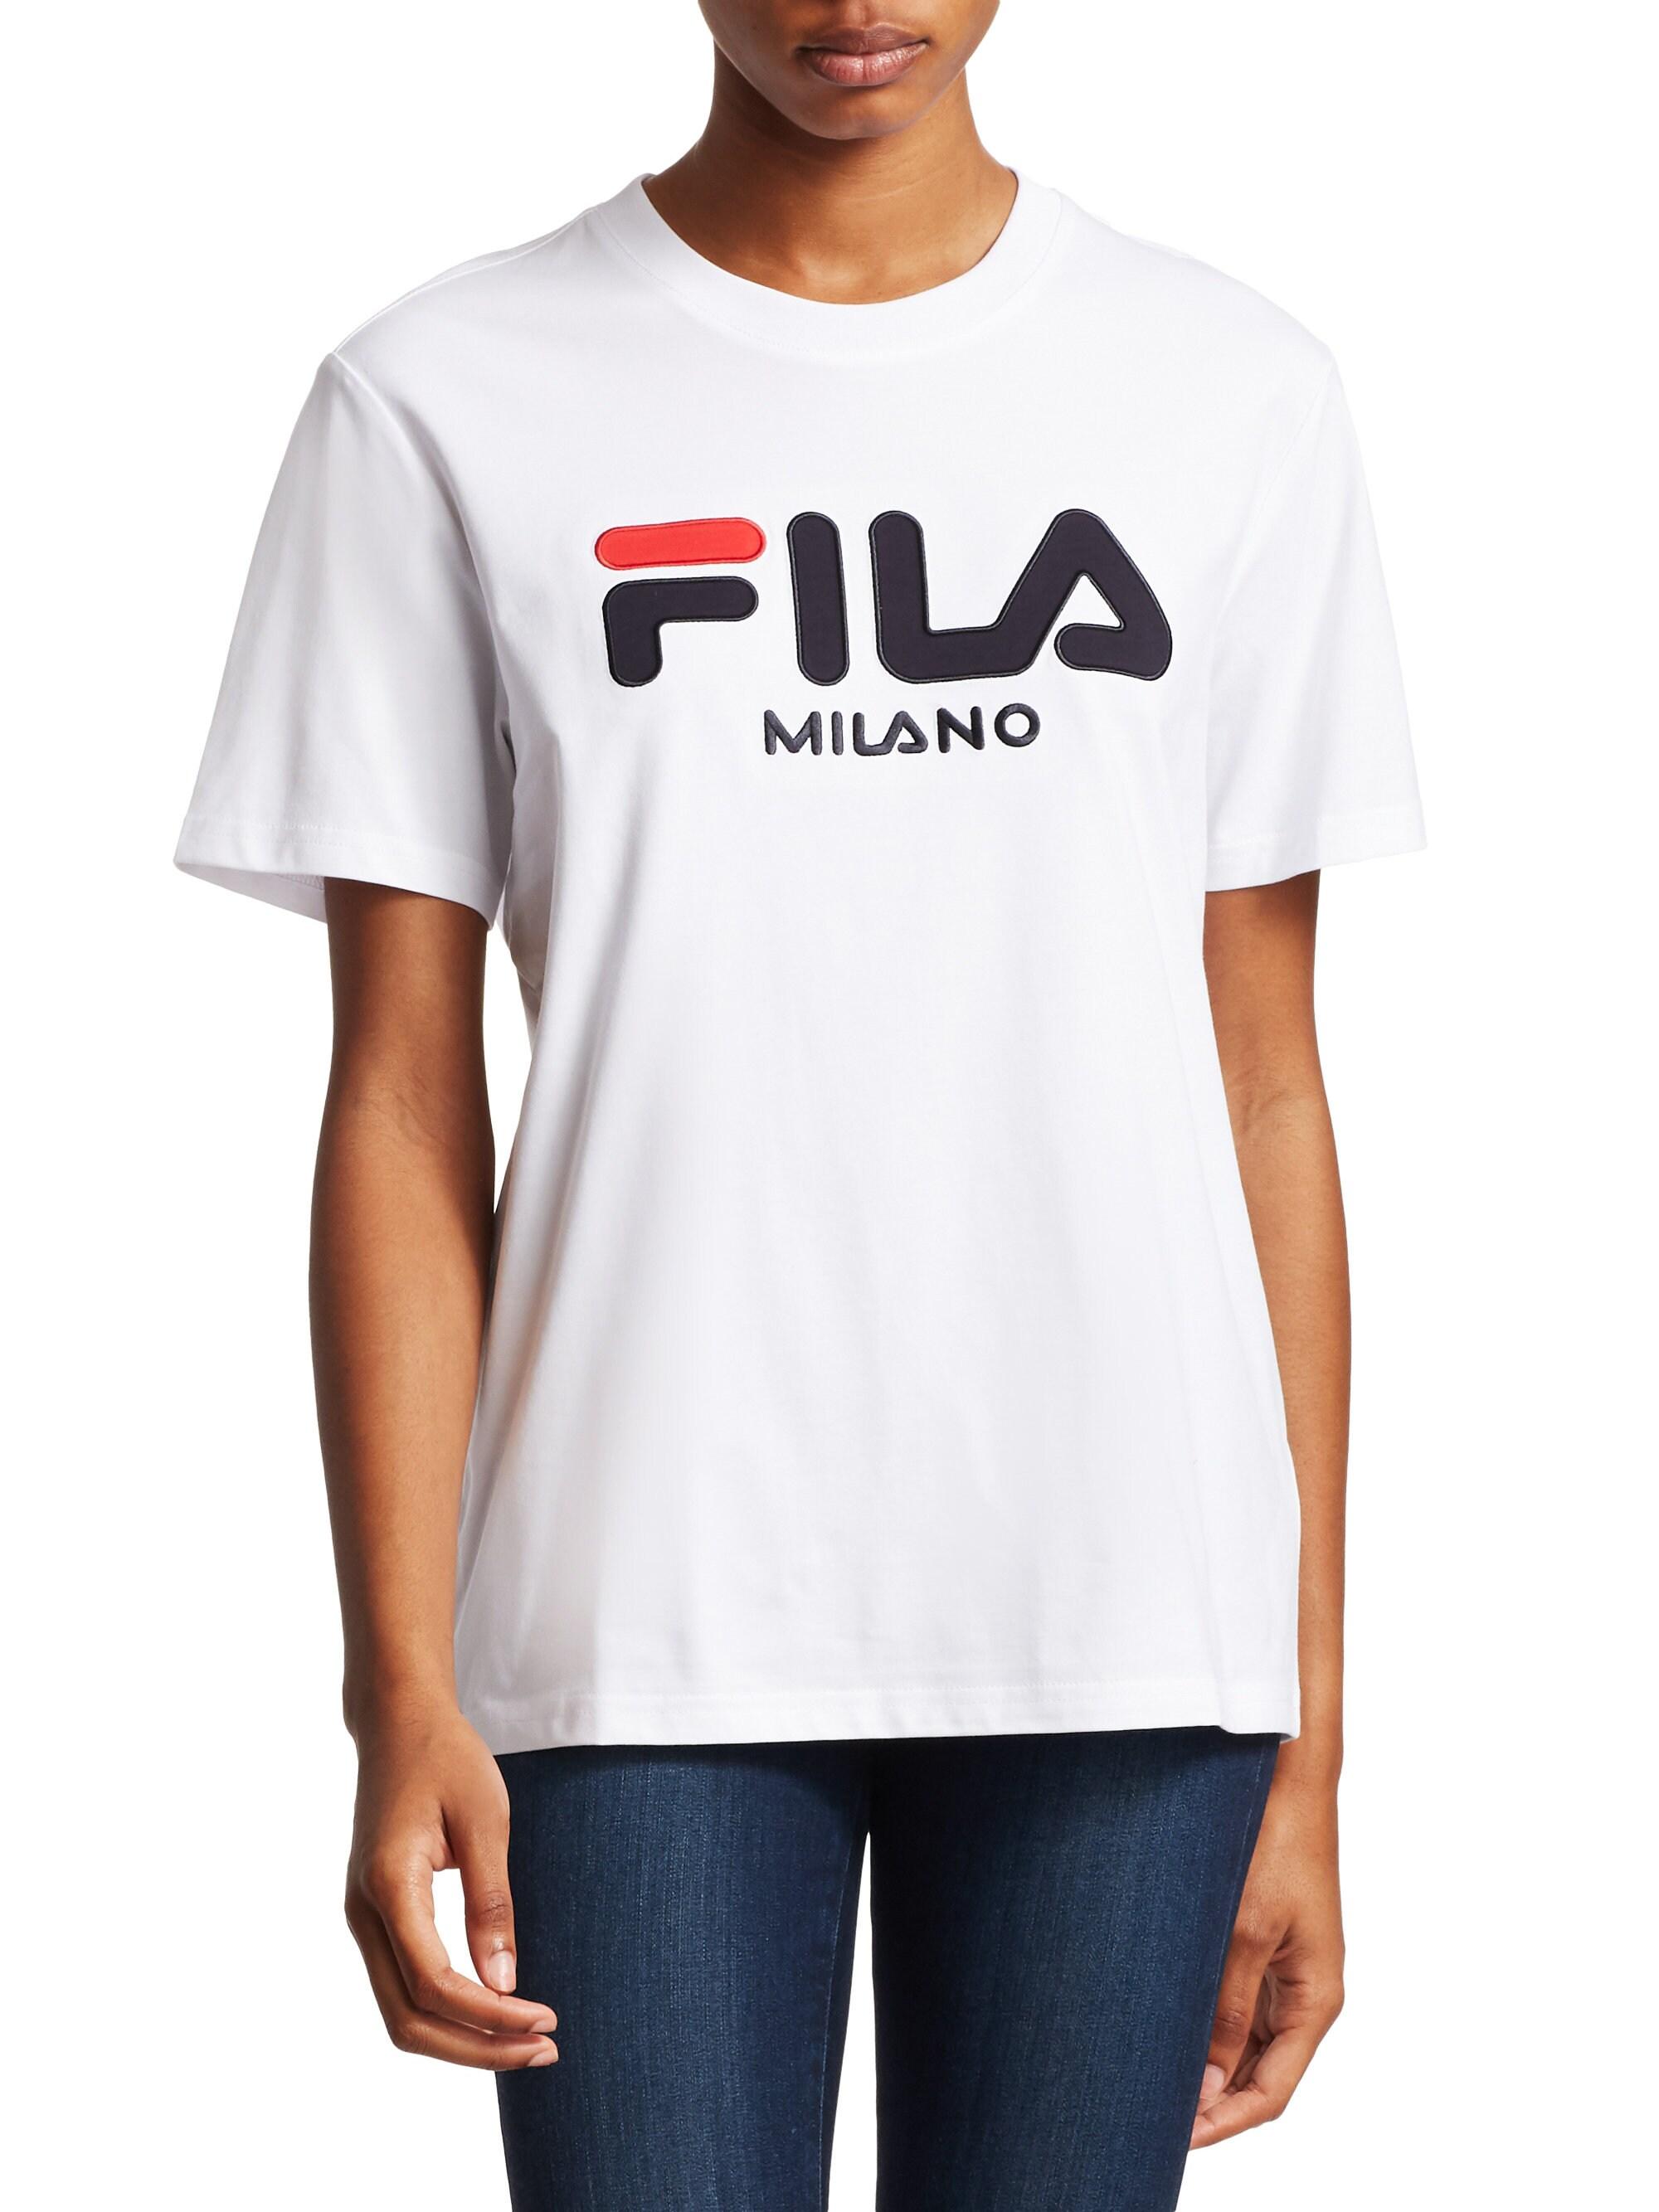 Fila Cotton Runway Milano Logo Tee in White - Lyst